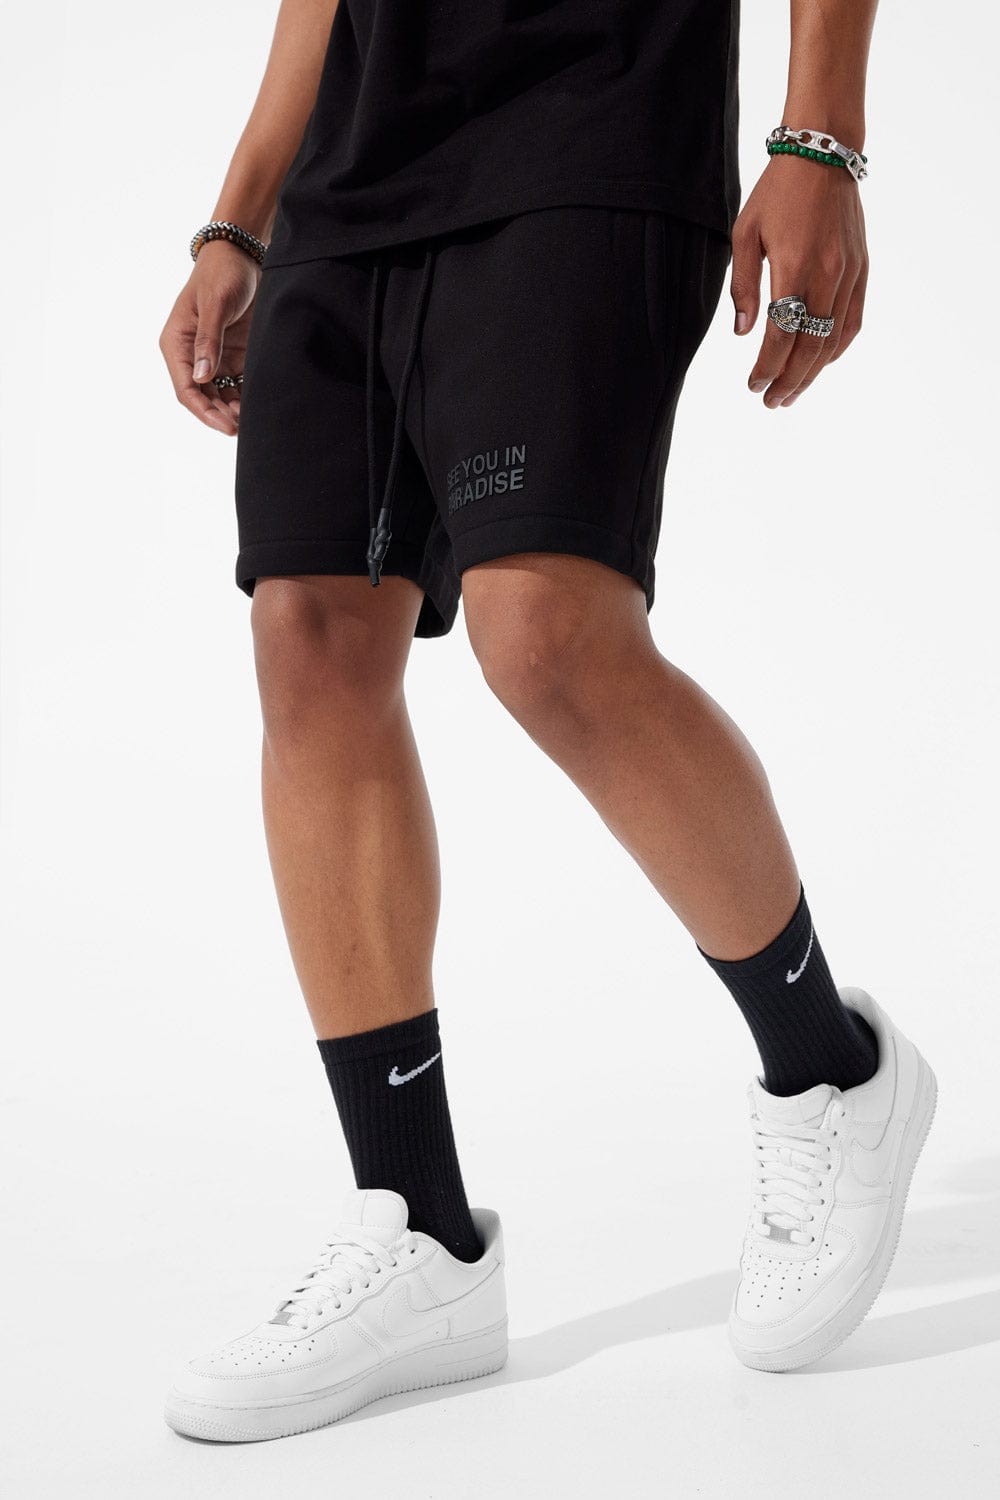 Jordan Craig Retro - Paradise Tonal Shorts (Black) S / Black